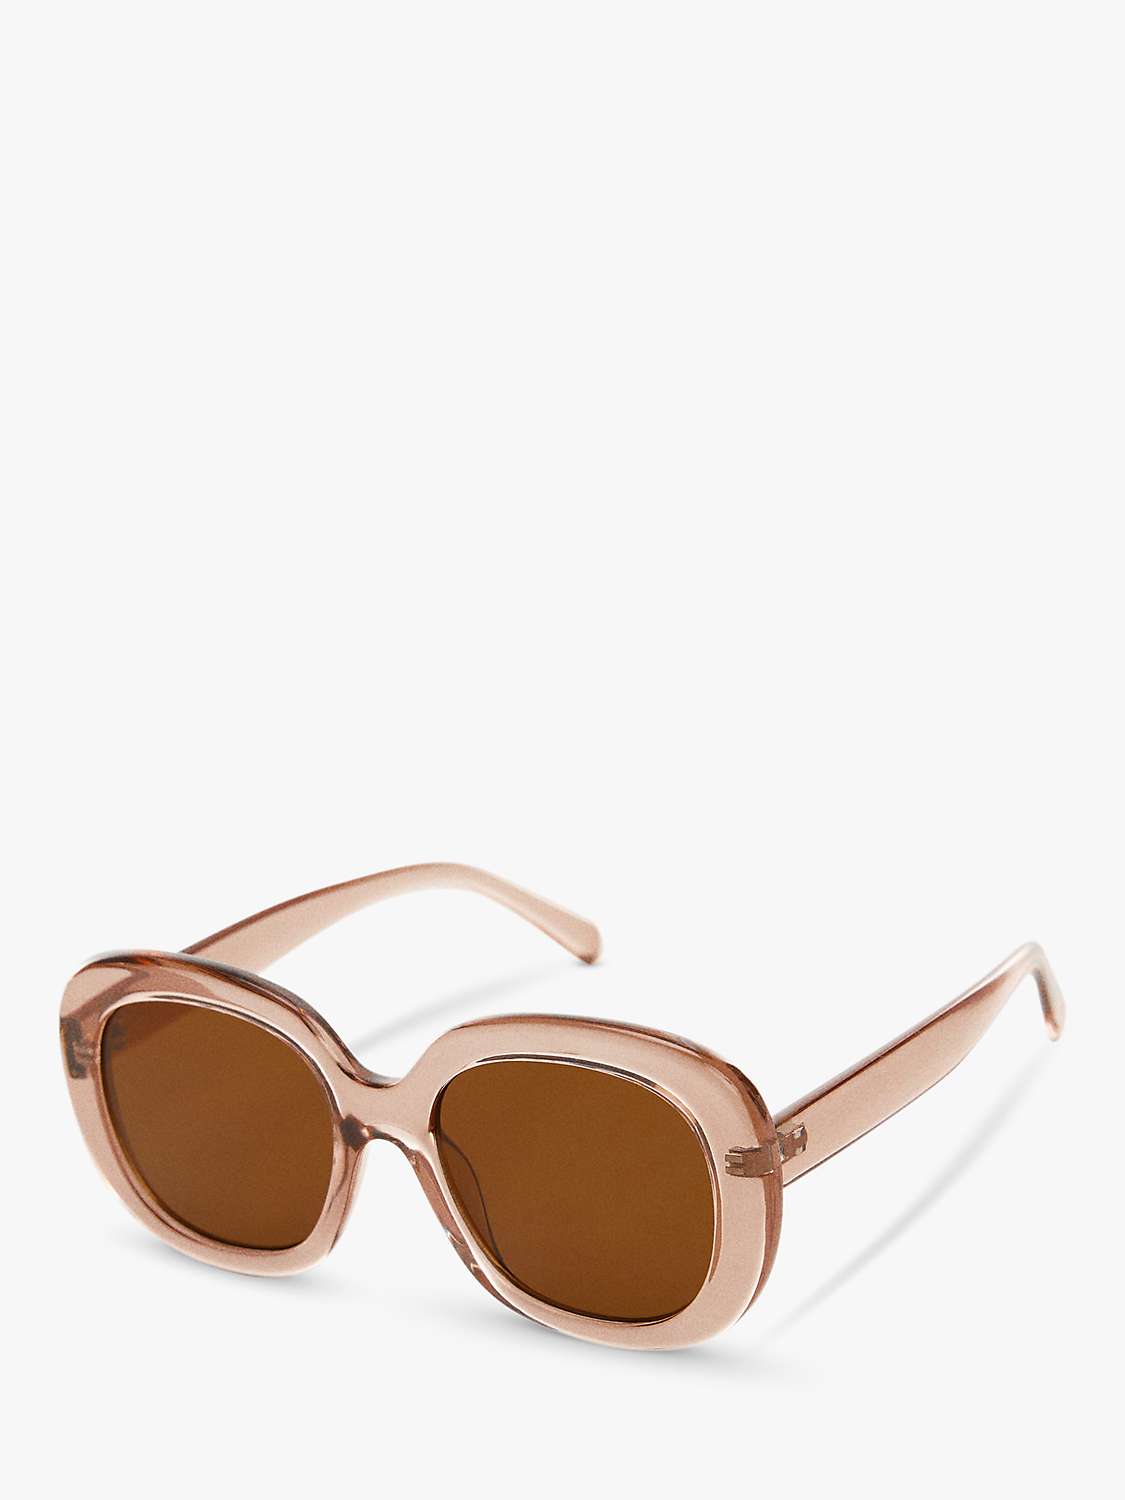 Buy Mango Women's Favignan Oval Sunglasses, Clear Orange/Brown Online at johnlewis.com